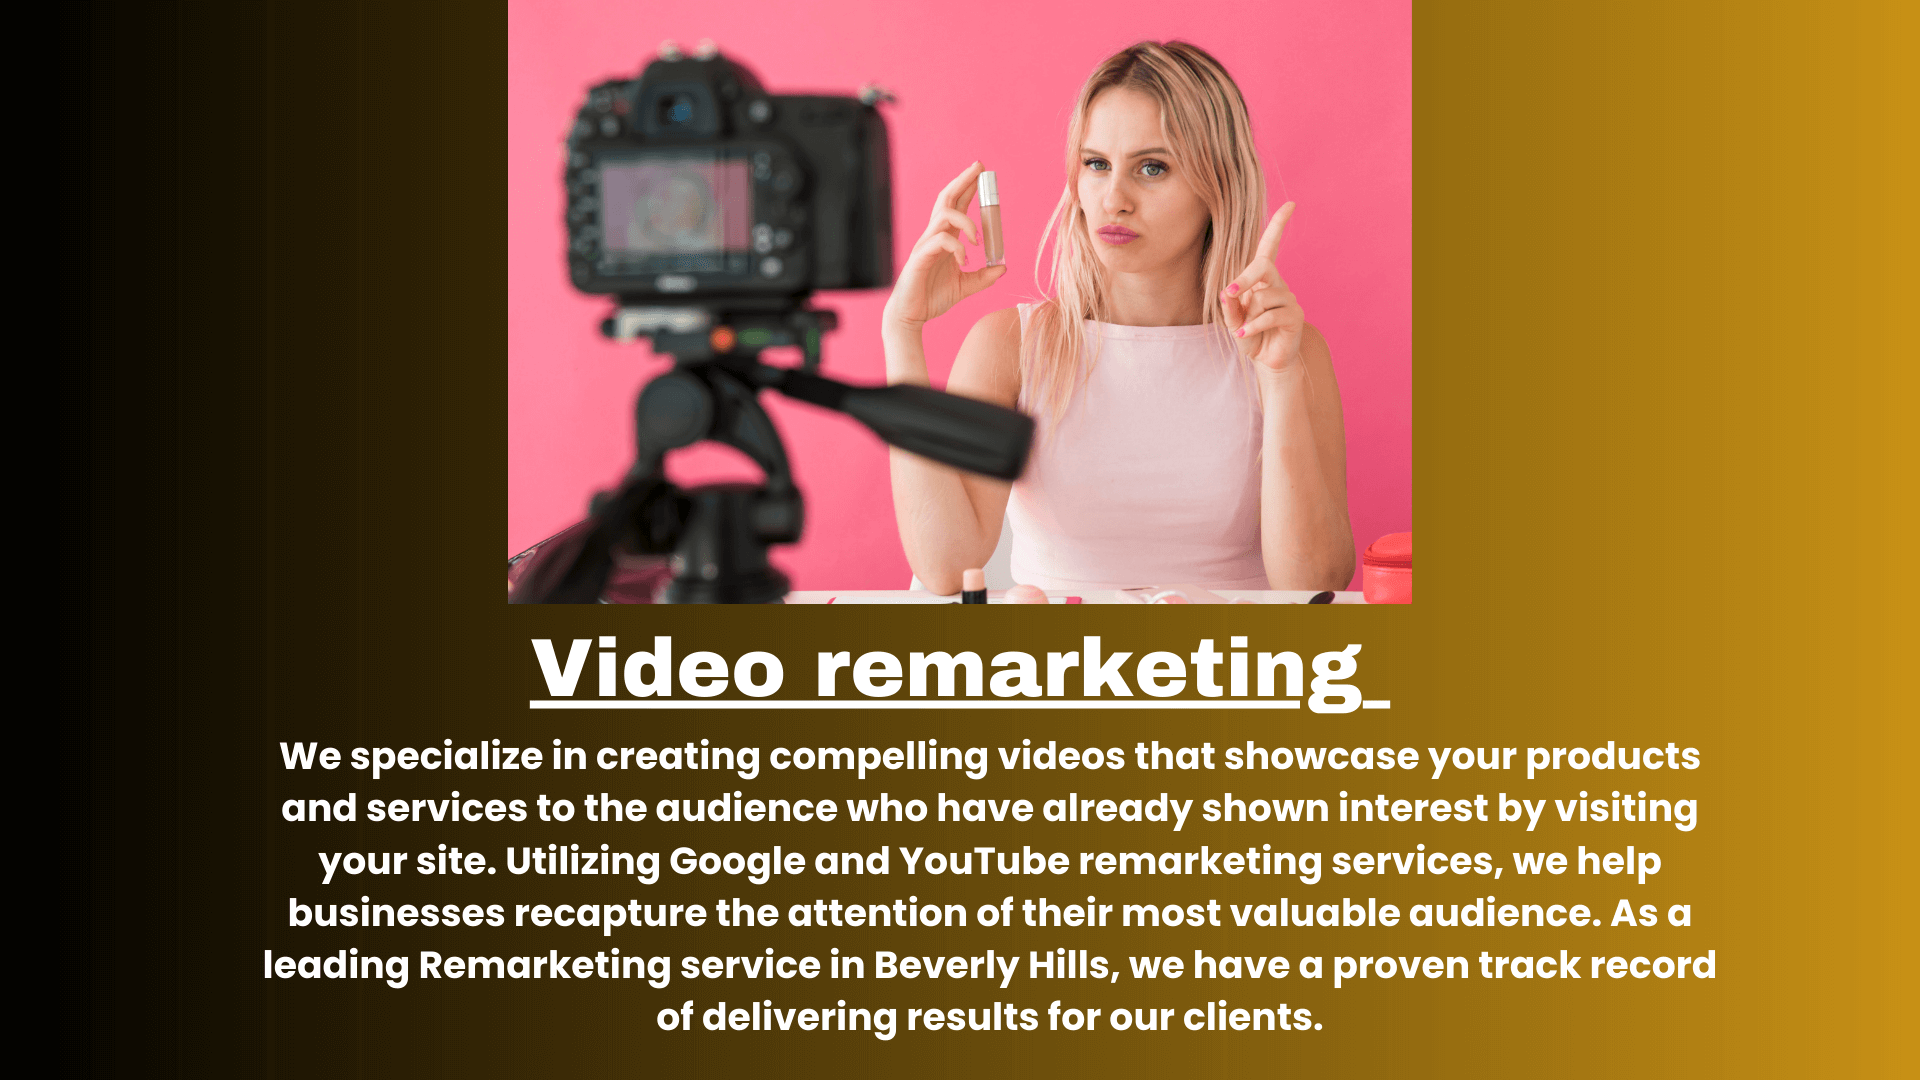 Video remarketing